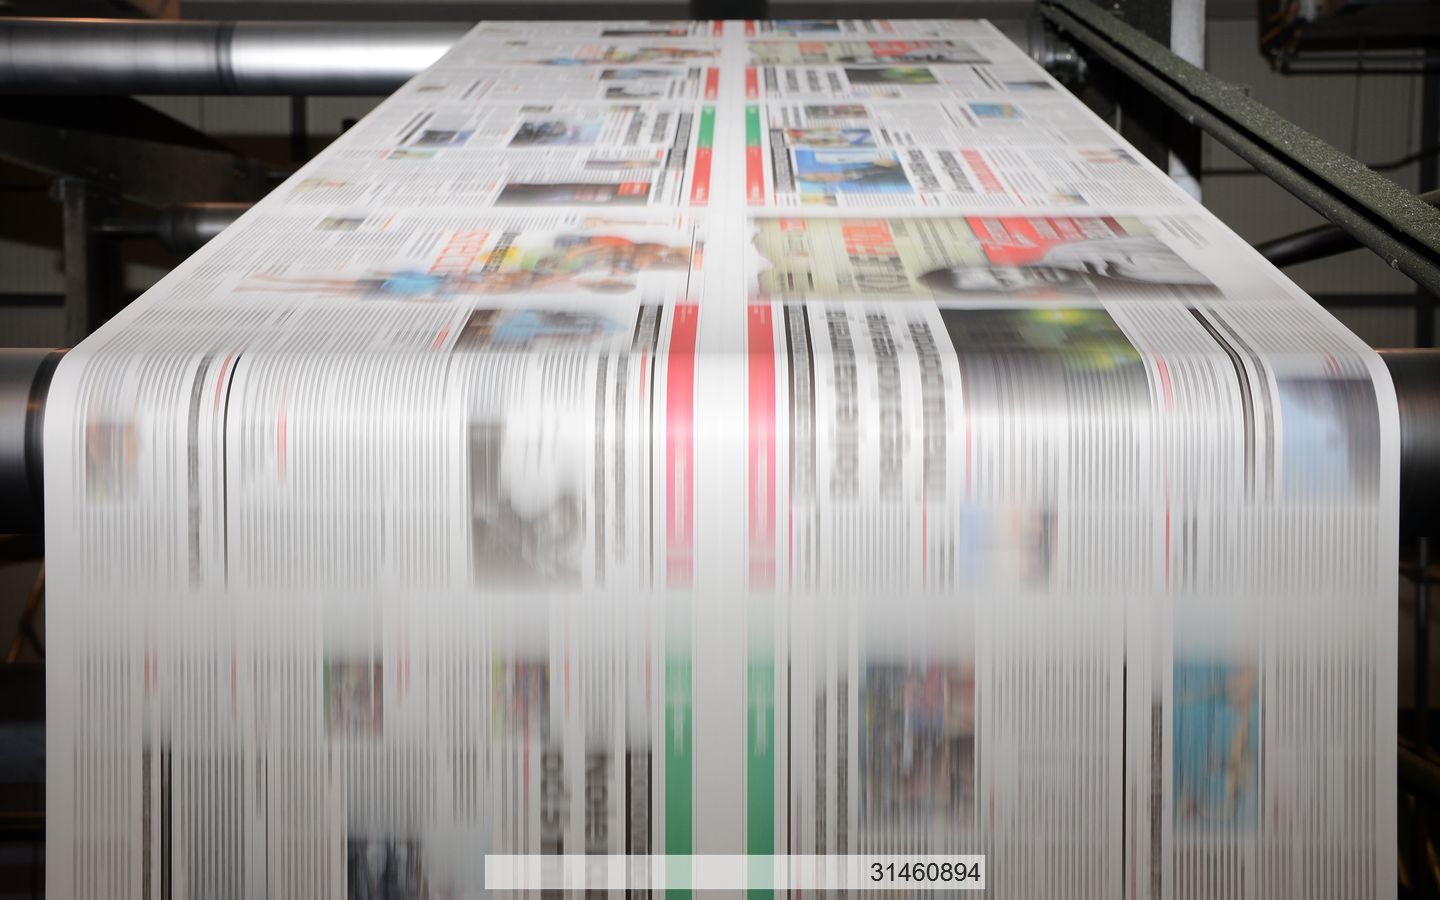 Finnish print media warns over severe shortage of paper 